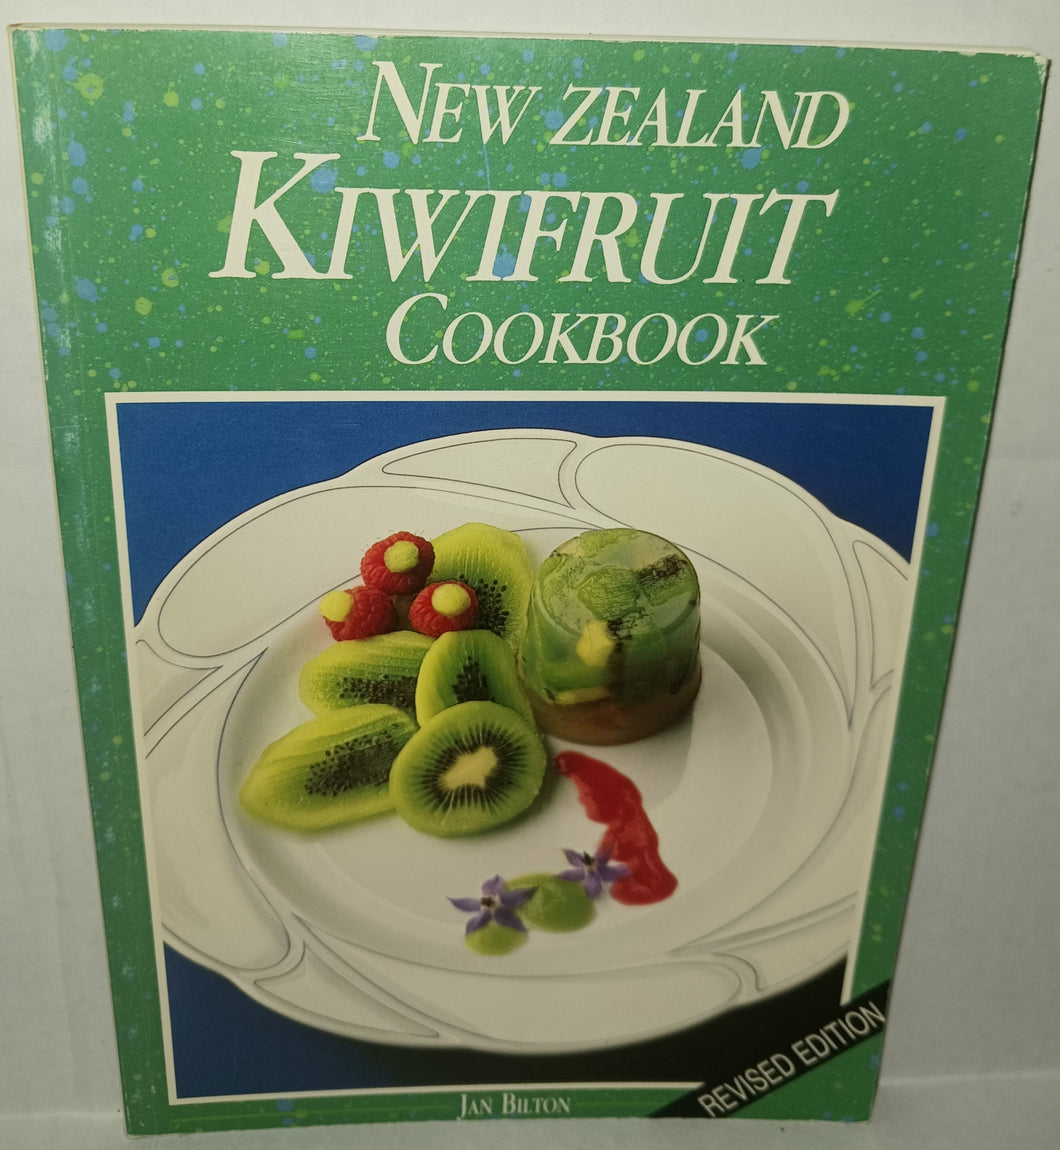 Jan Bilton New Zealand Kiwifruit Cookbook Revised Edition 1990 Irvine Holt Paperback